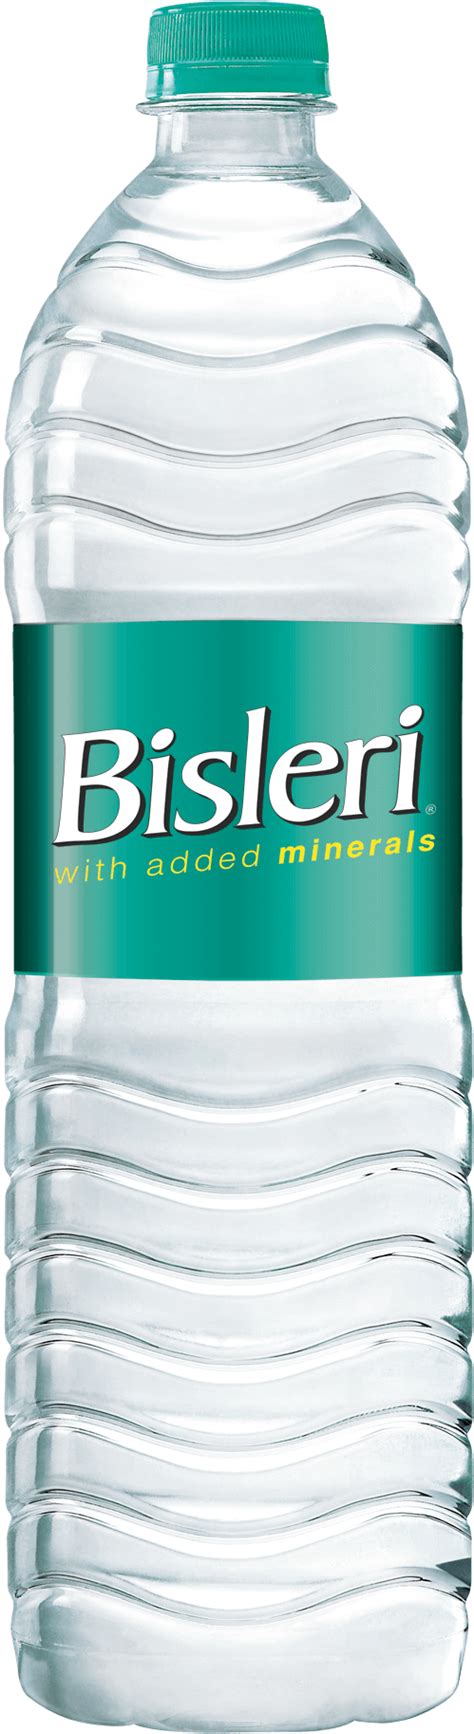 Bisleri Mineral Water बिसलेरी मिनरल वॉटर Trusted Packaged Drinking